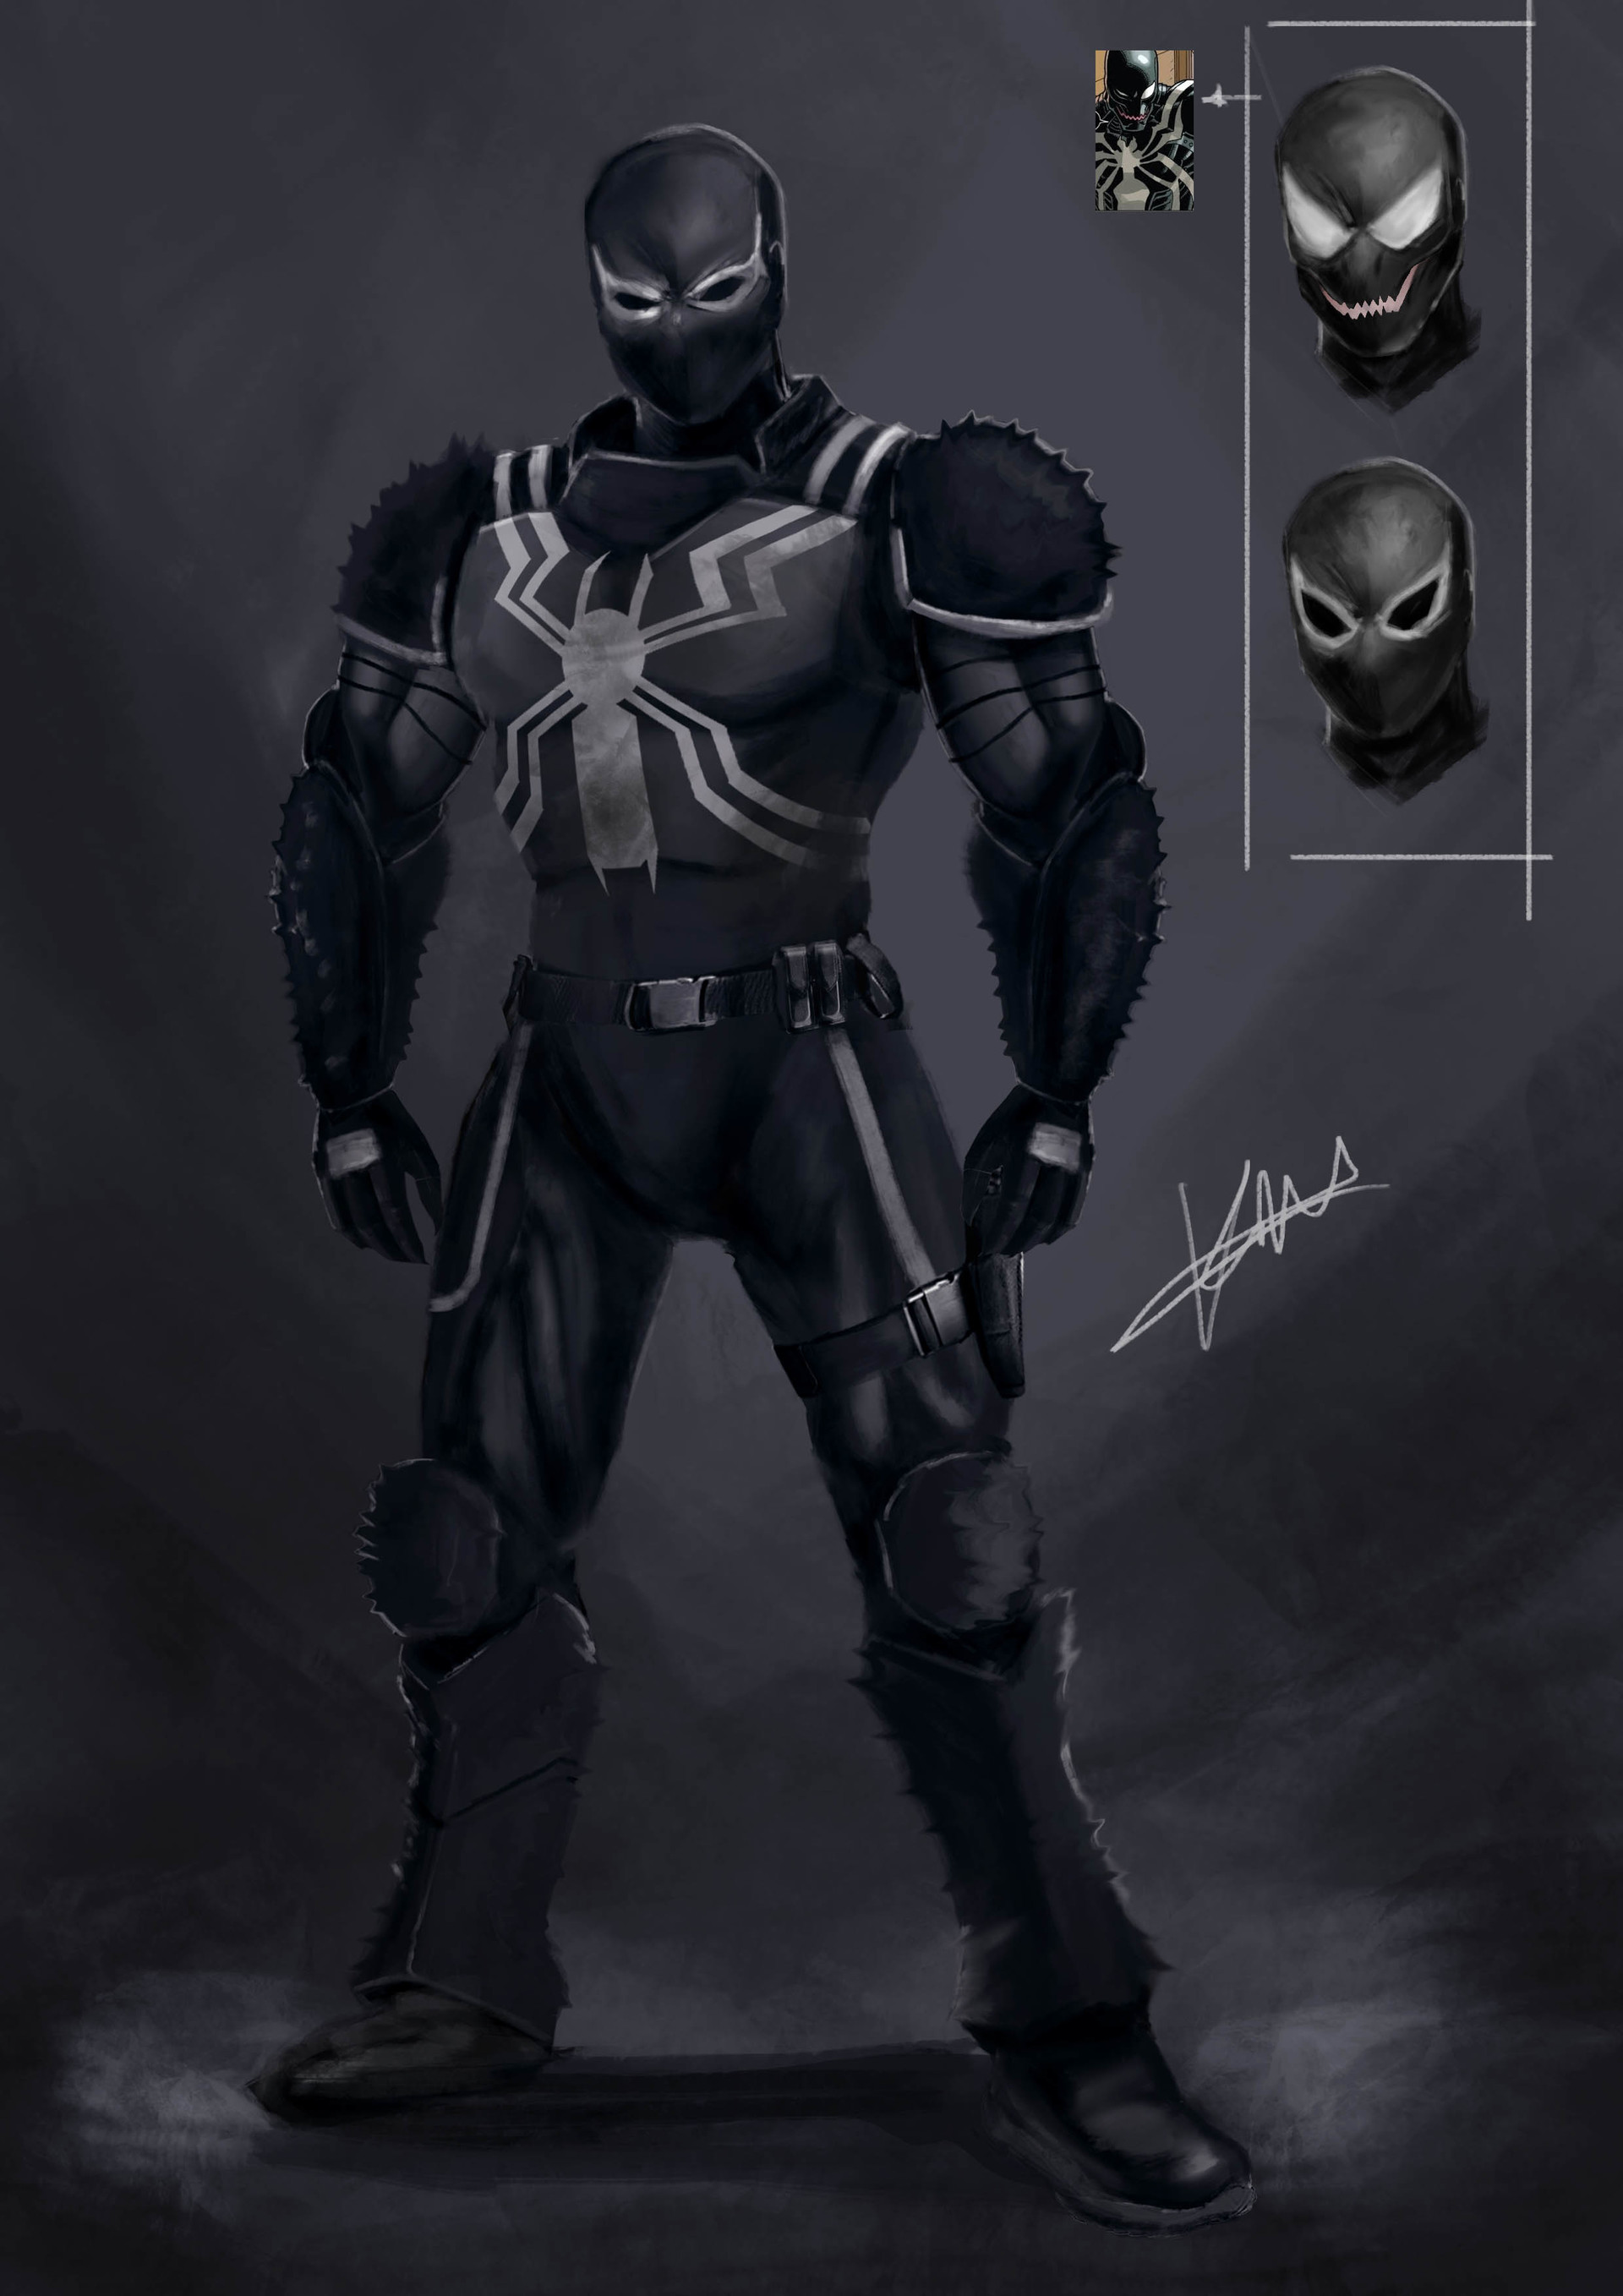 ArtStation - Agent Venom, Khaidir Semail